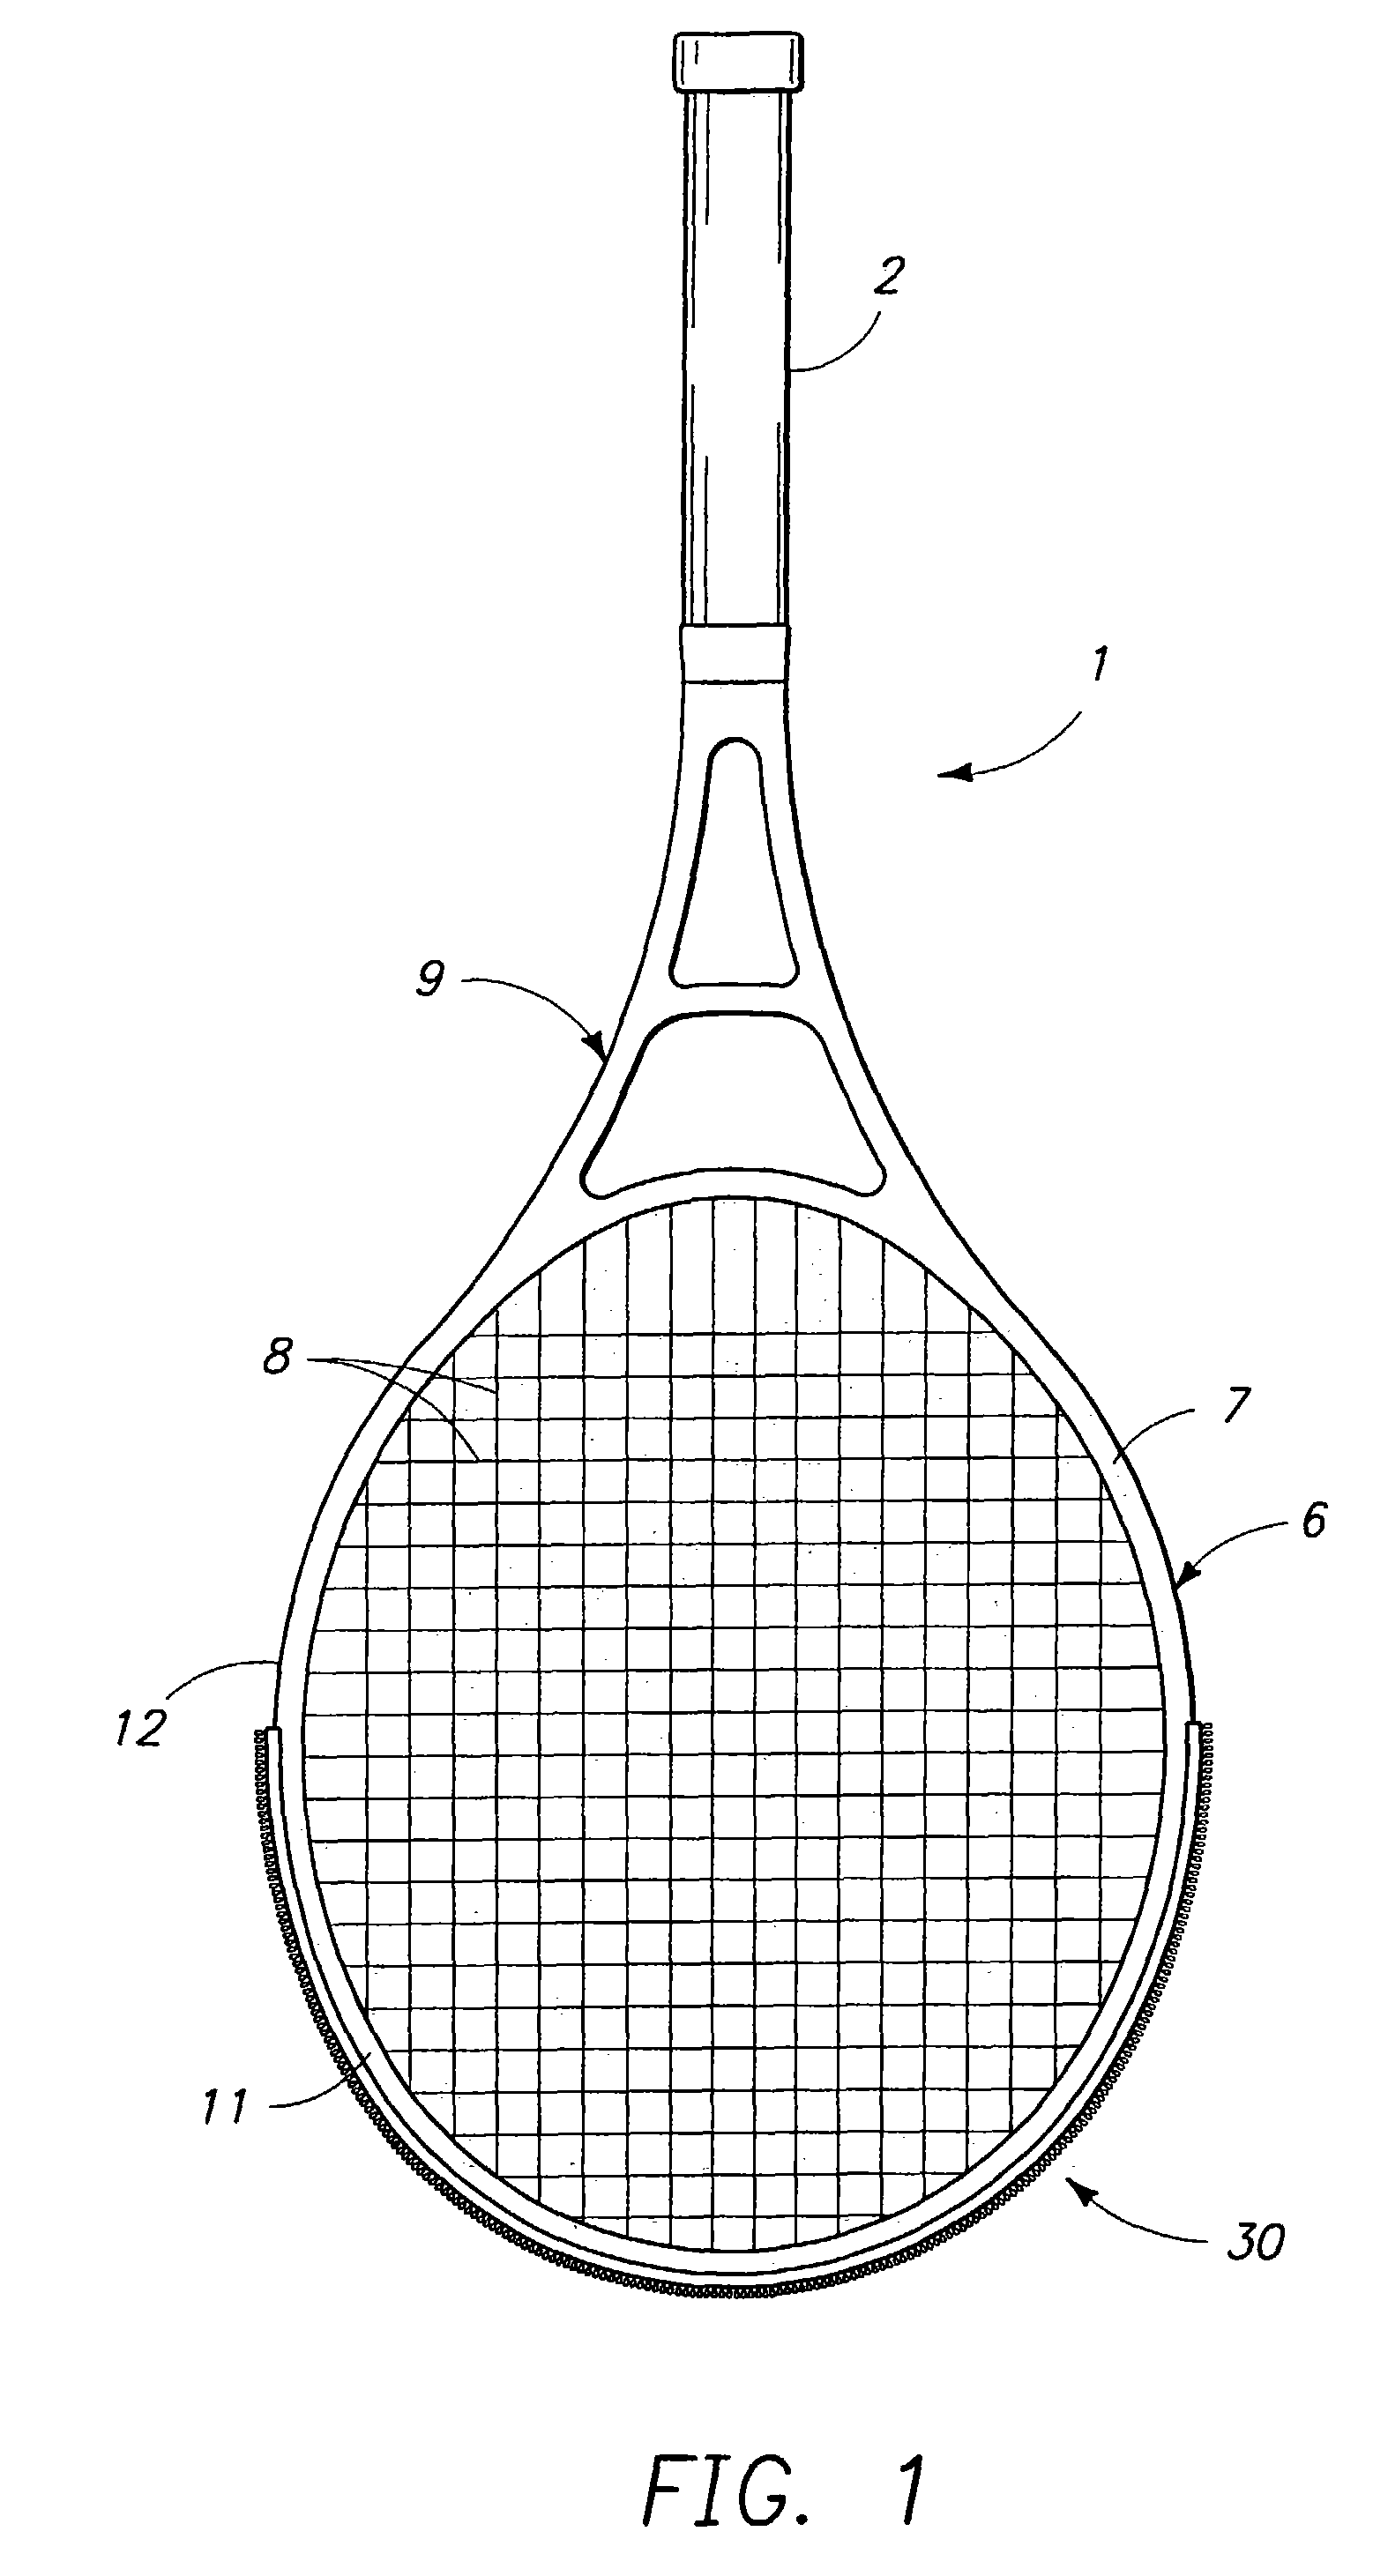 Tennis racquet equipped with a tennis ball retriever